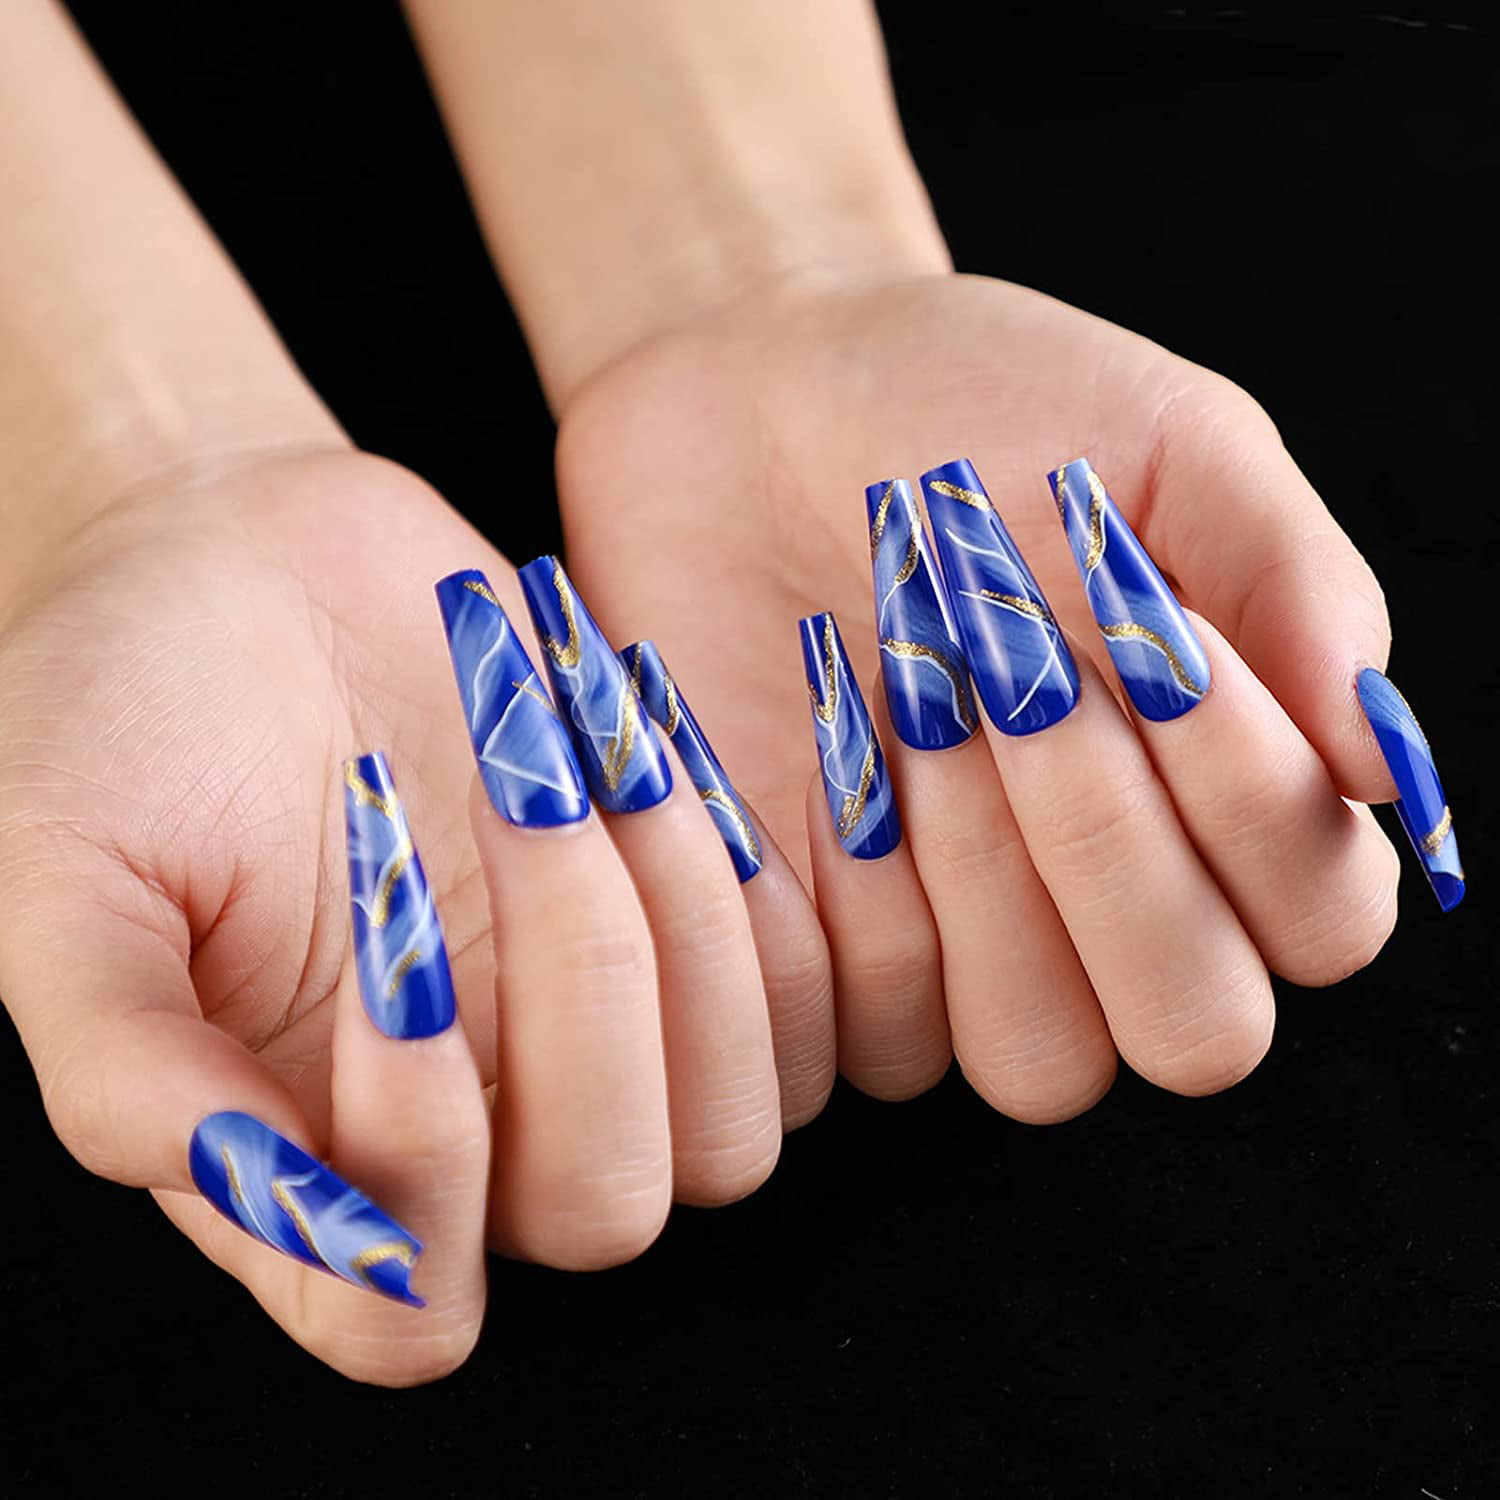 24 Pcs Press on Nails Medium Fake Nails Noble Blue Glue on Nails False Nails  with Glue & Adhesive tape Static Acrylic Nails for Women and Girls -  